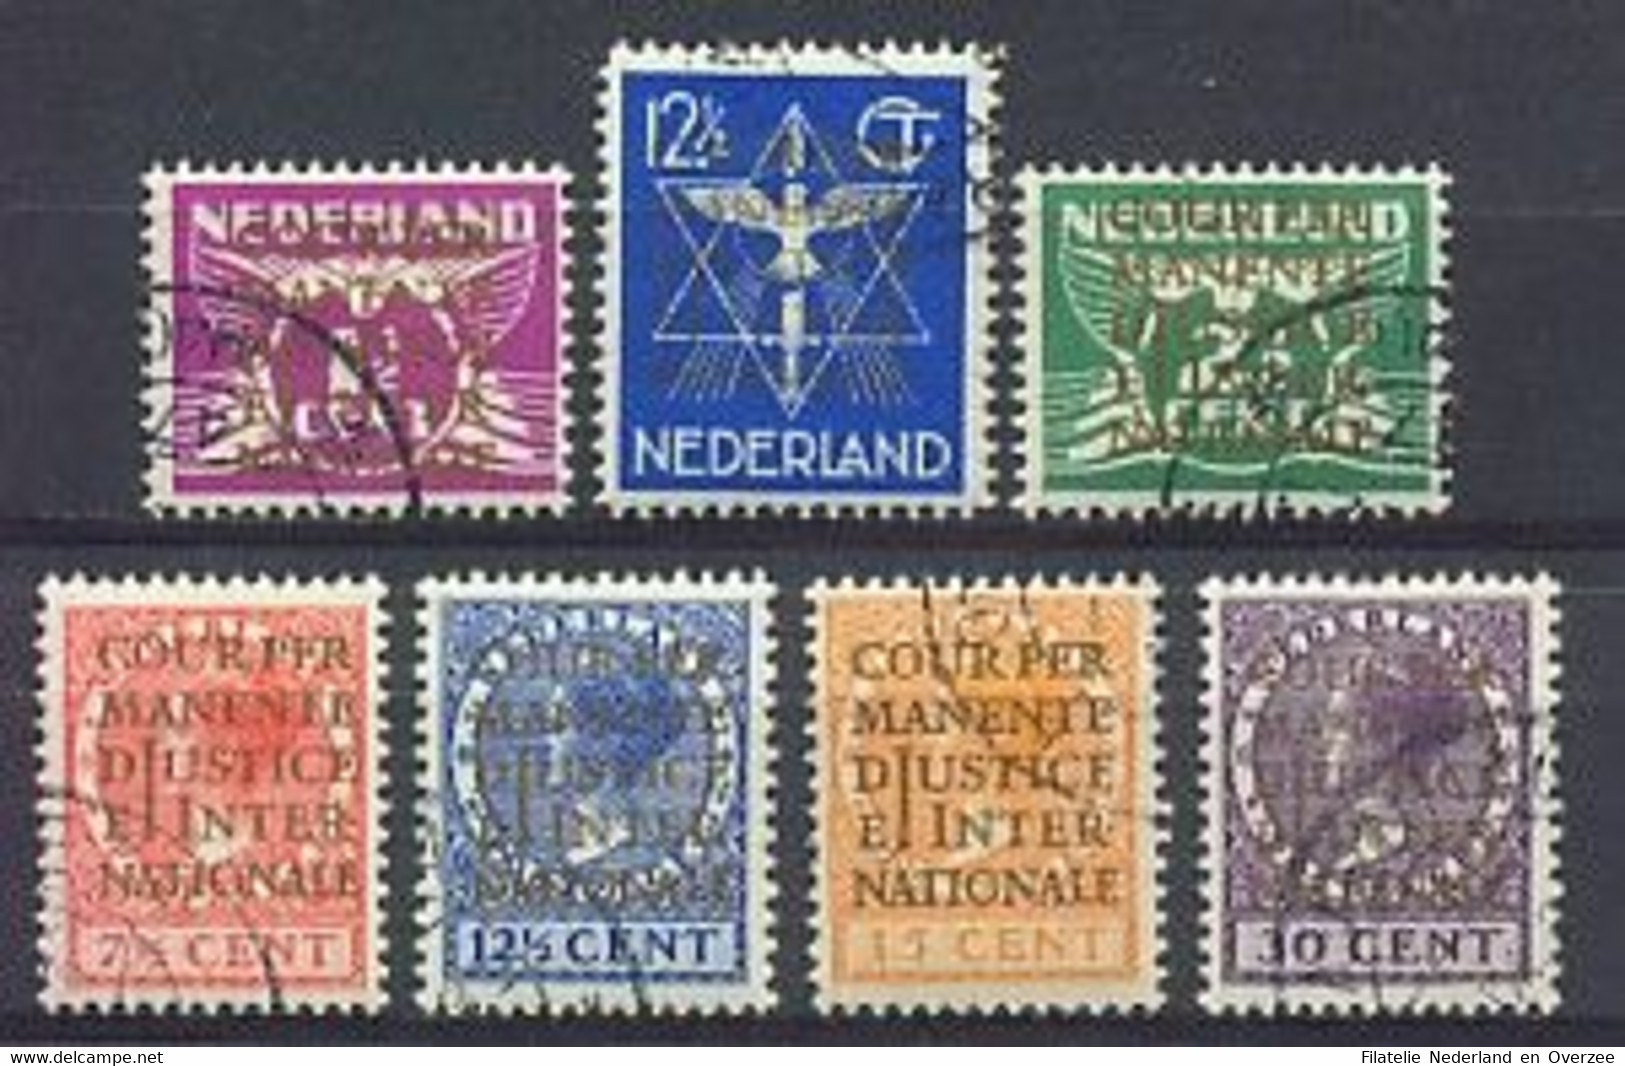 Nederland 1934-1938 Dienst 9/15 Gestempeld/Used Cour Permanente De Justice Internationale, Service Stamps - Dienstmarken